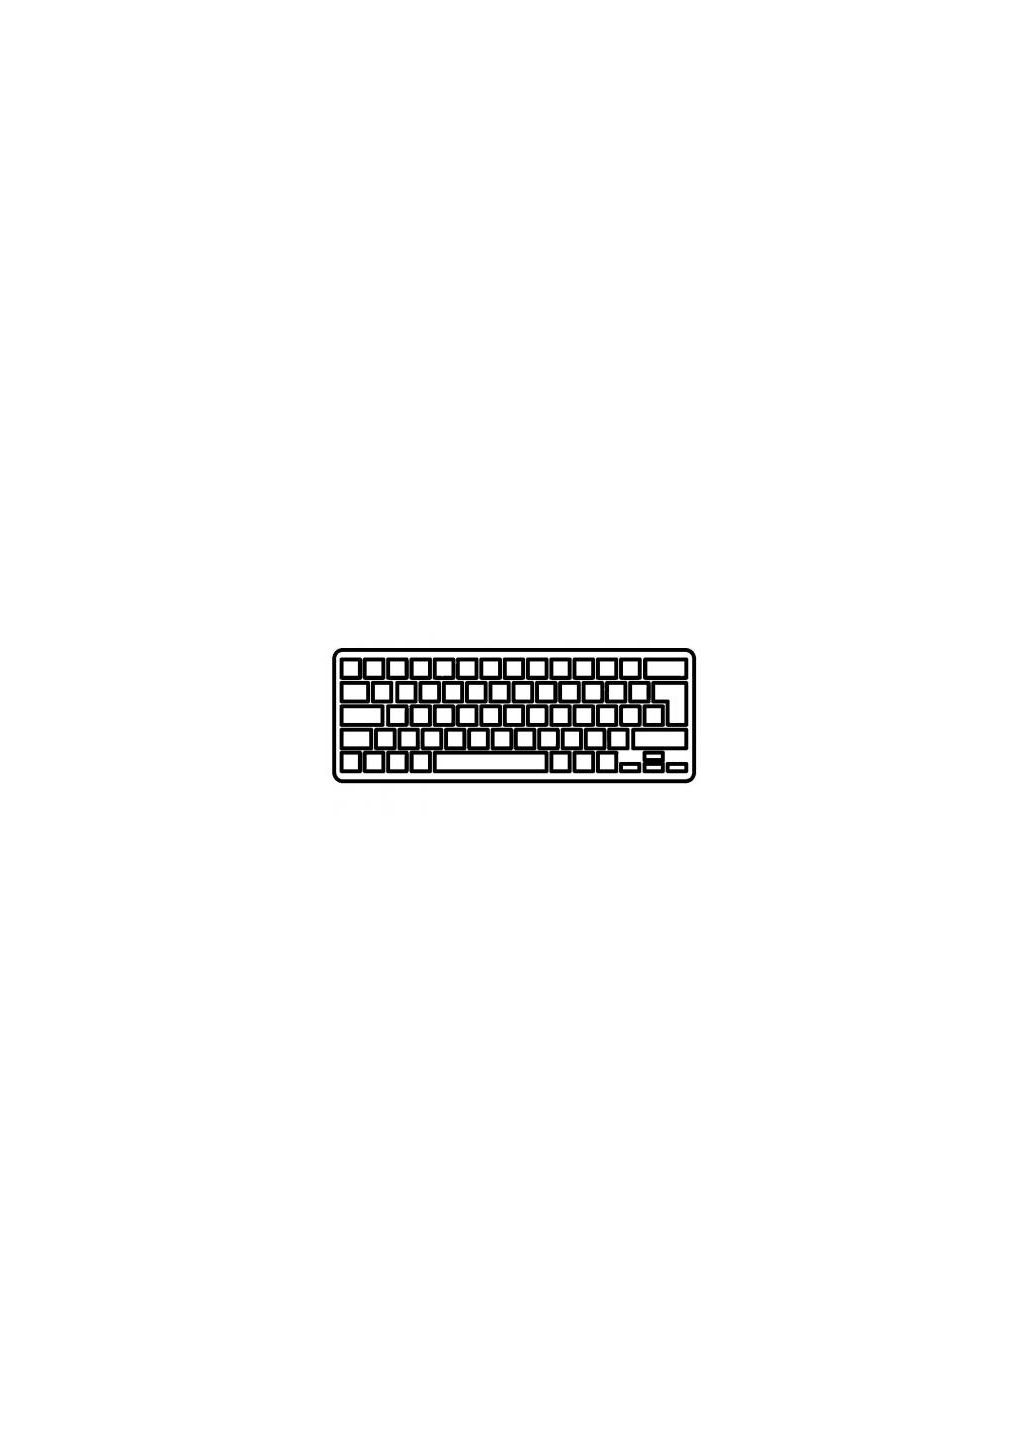 Клавиатура ноутбука Pavilion 17E Series черная без рамки RU (A43760) HP pavilion 17-e series черная без рамки ru (276706739)